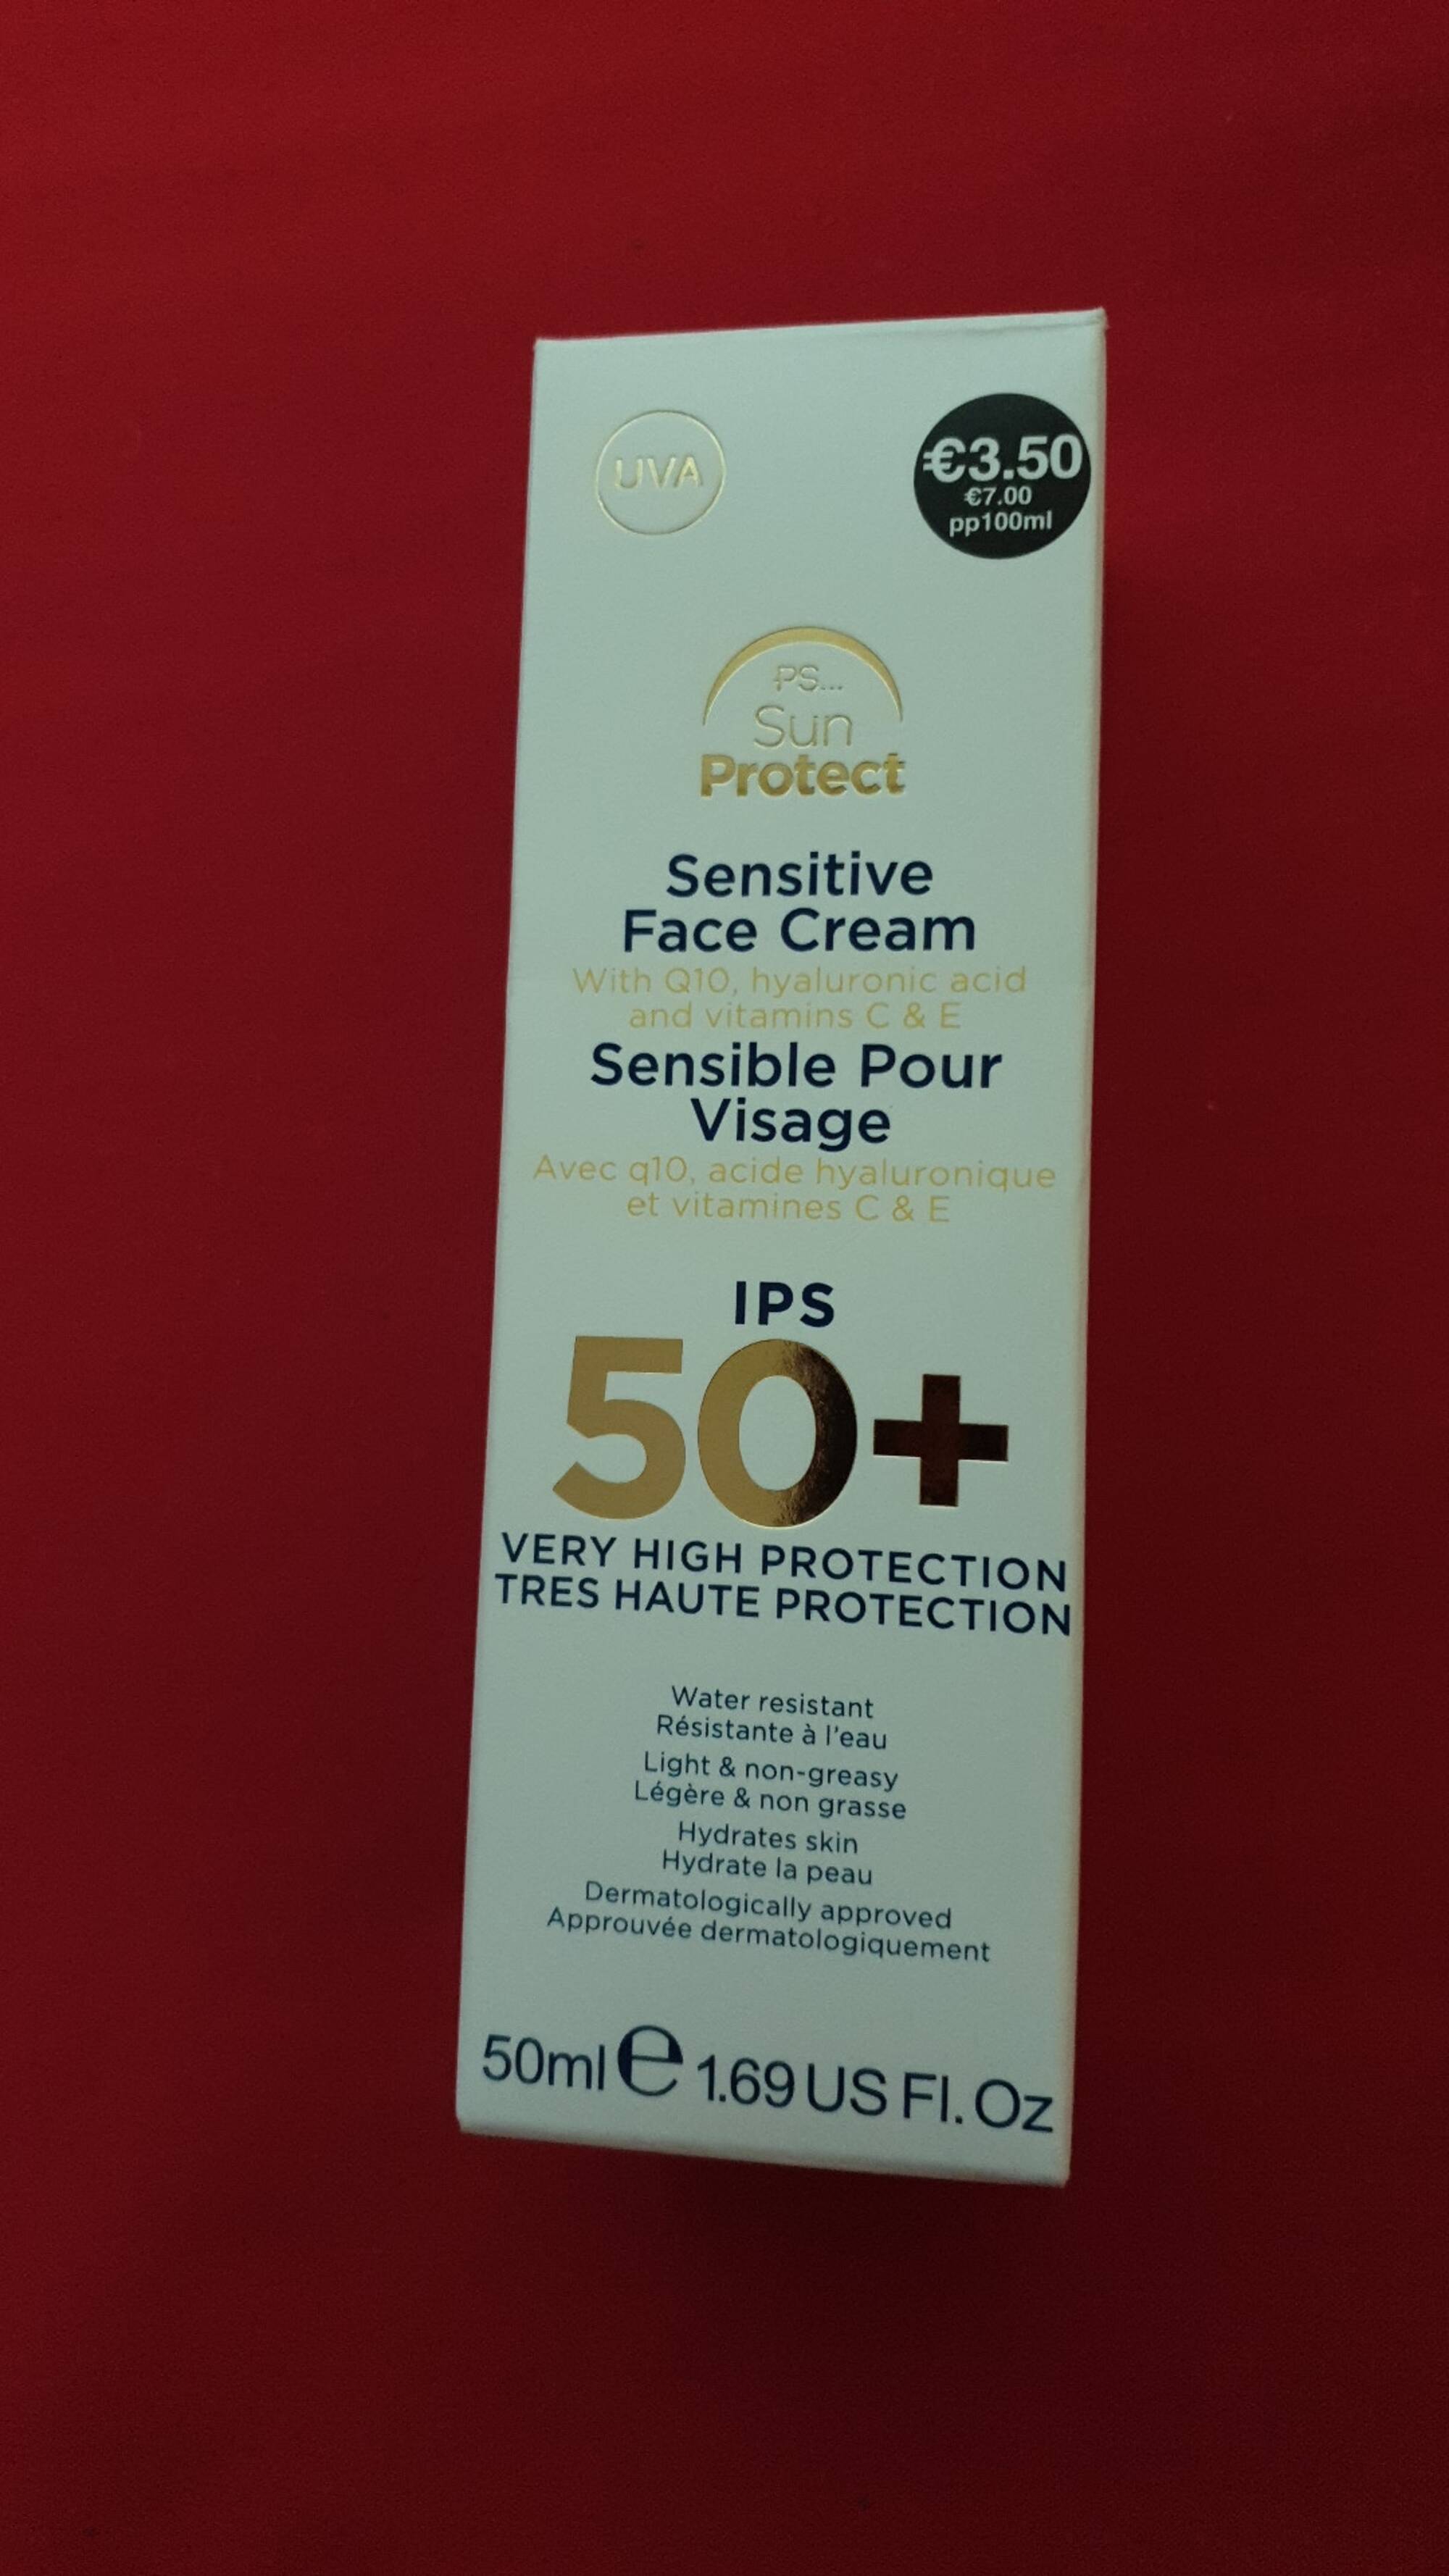 PRIMARK - PS... Sun protect - Sensitive face cream IPS 50+